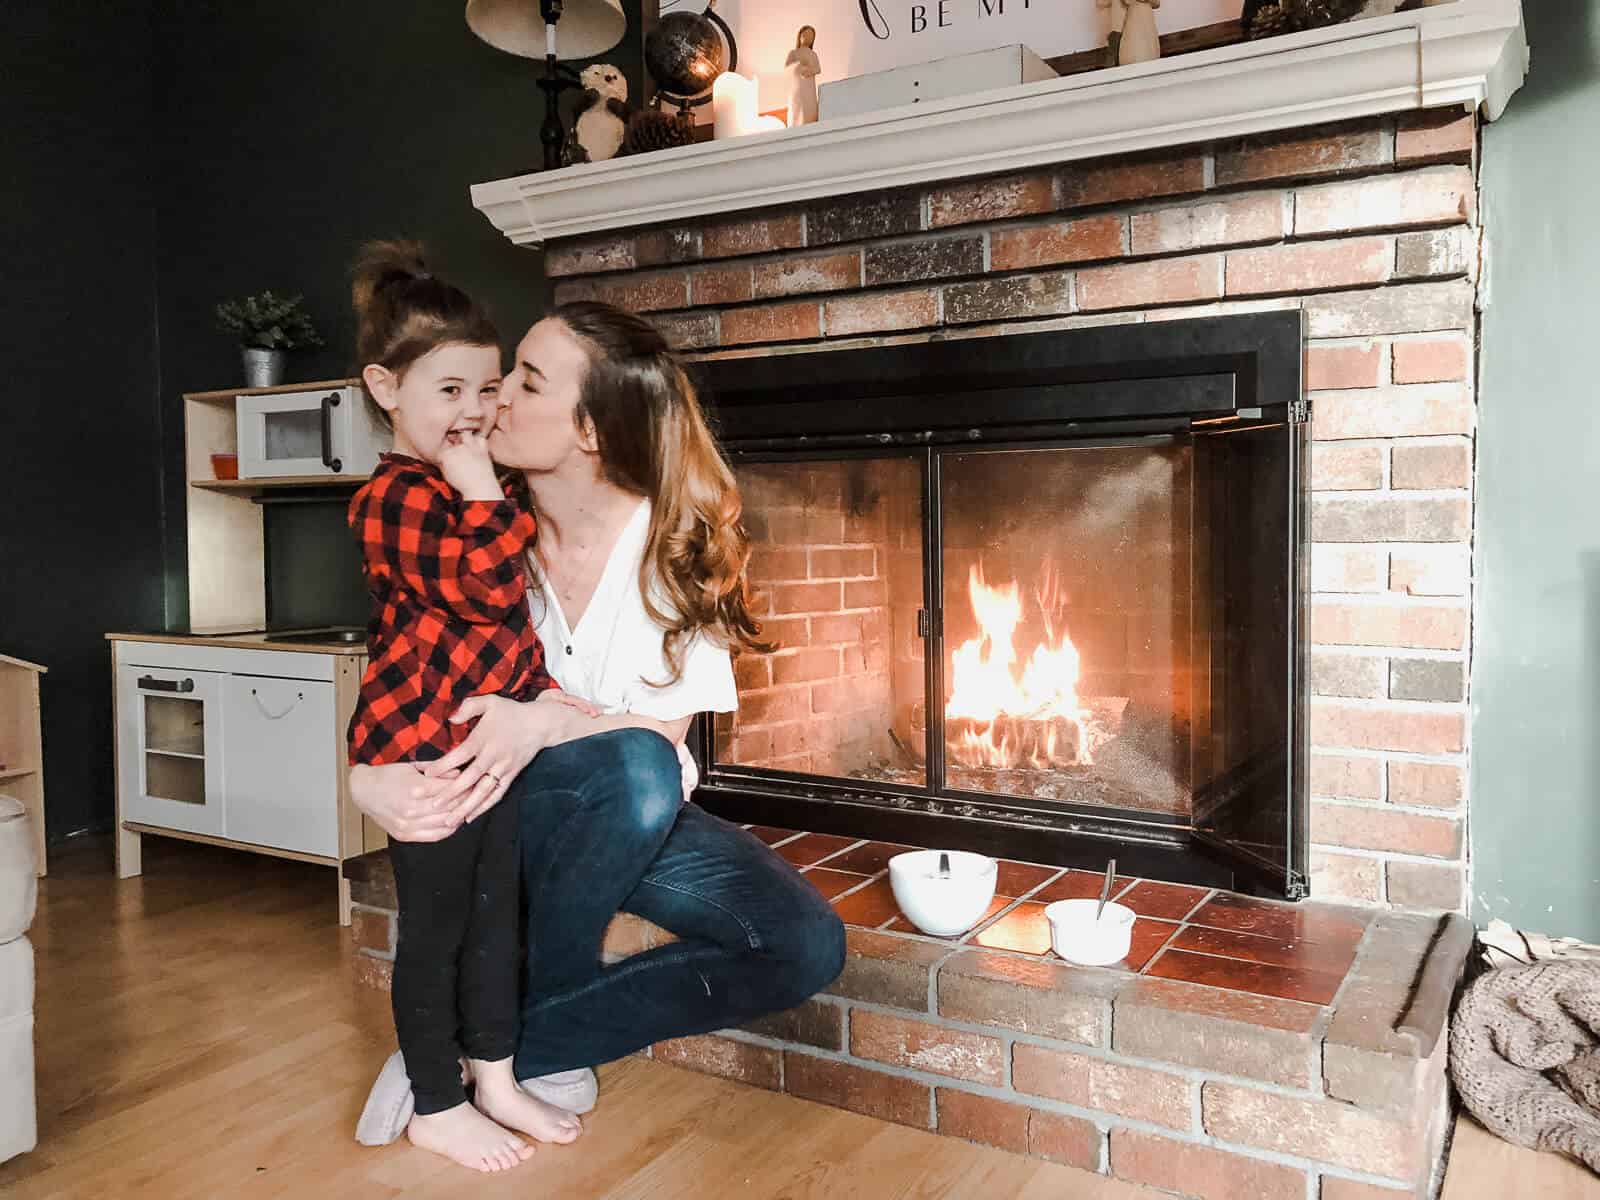 Mom hugs child next to cozy fireplace.